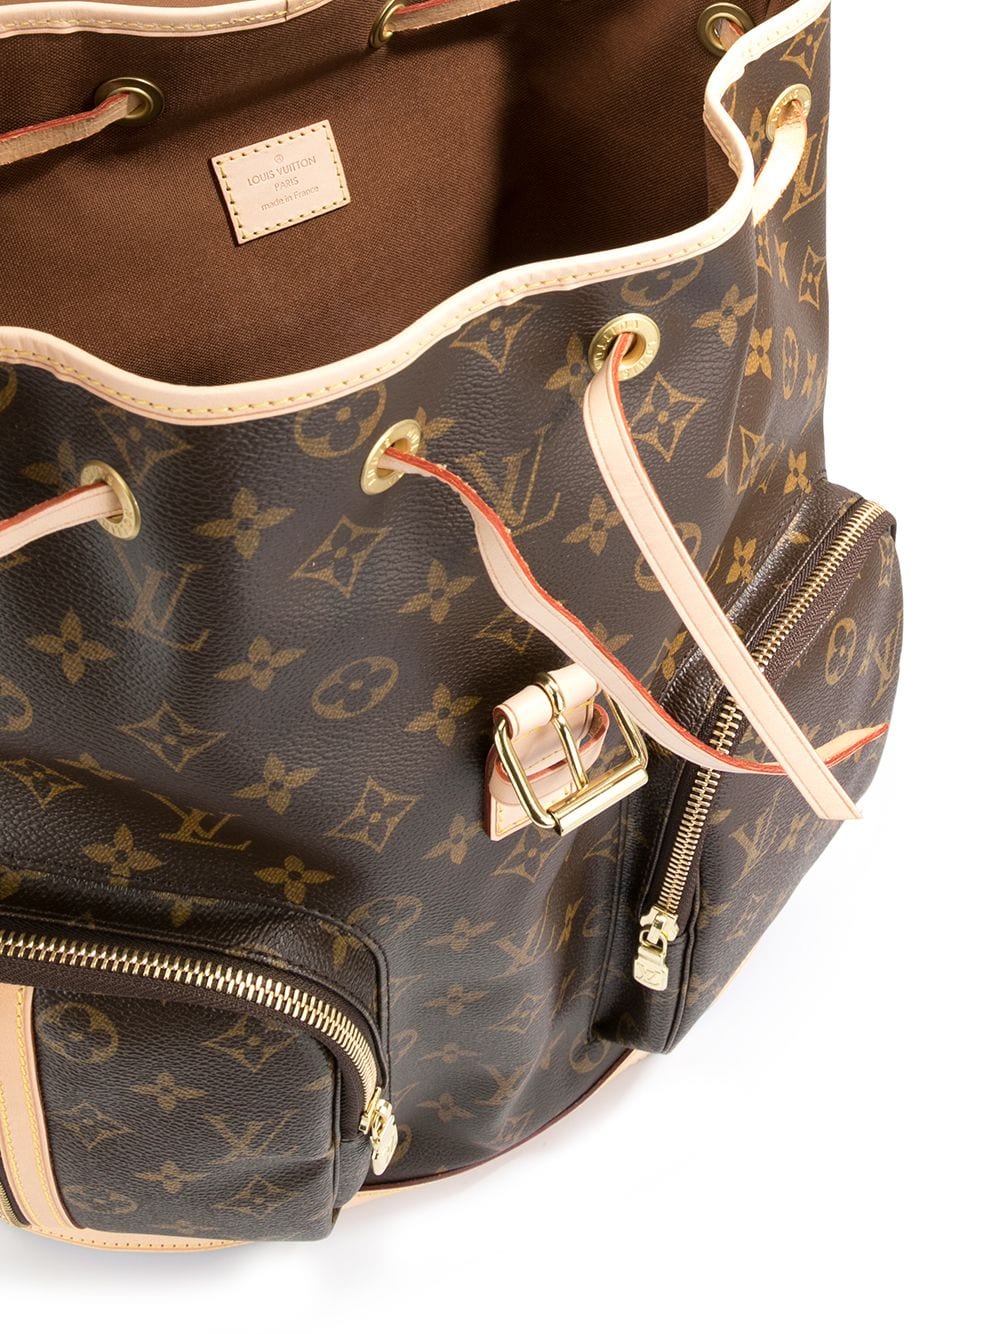 Louis Vuitton Sac A Dos Bosphore Backpack Hand Bag - Farfetch